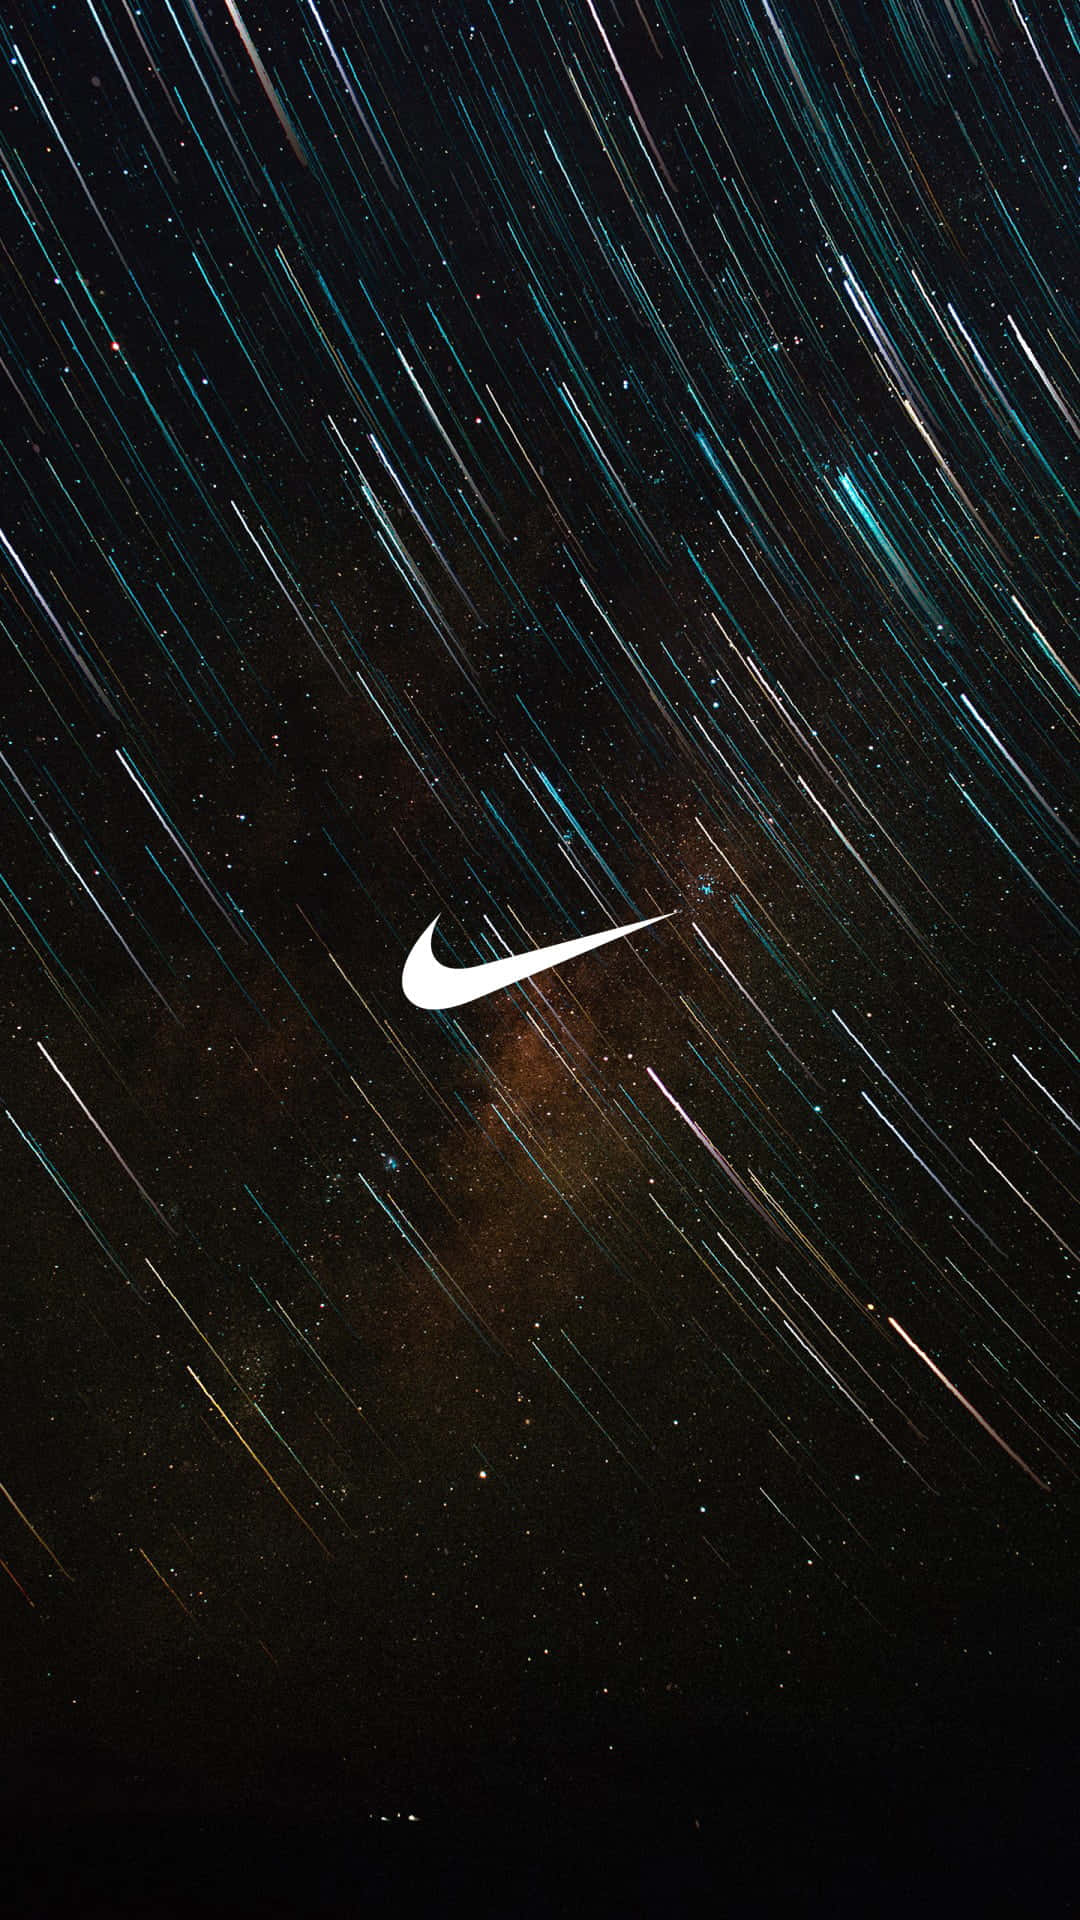 Free Nike Galaxy Wallpaper Downloads, [100+] Nike Galaxy Wallpapers for  FREE 